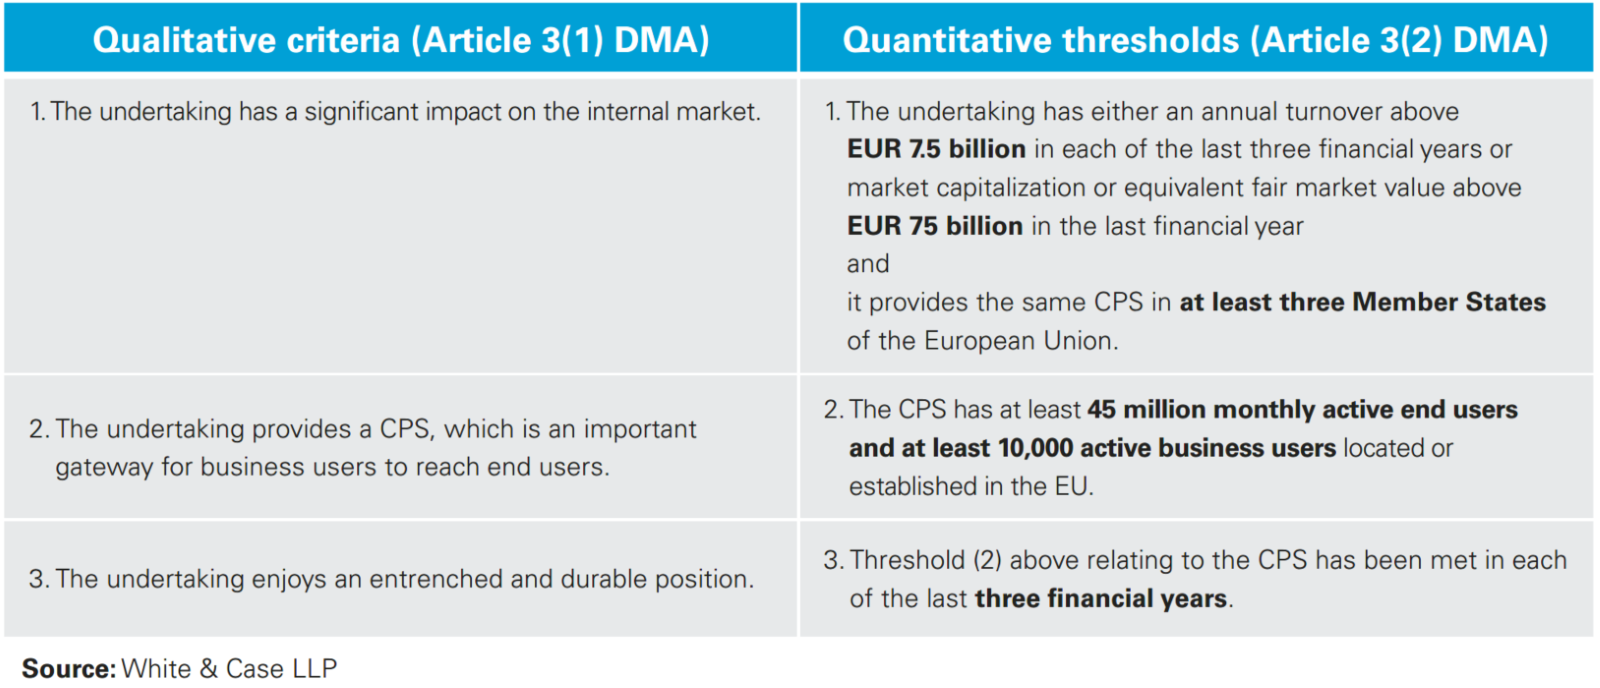 Qualitative criteria (Article 3(1) DMA) and Quantitative thresholds (Article 3(2) DMA)